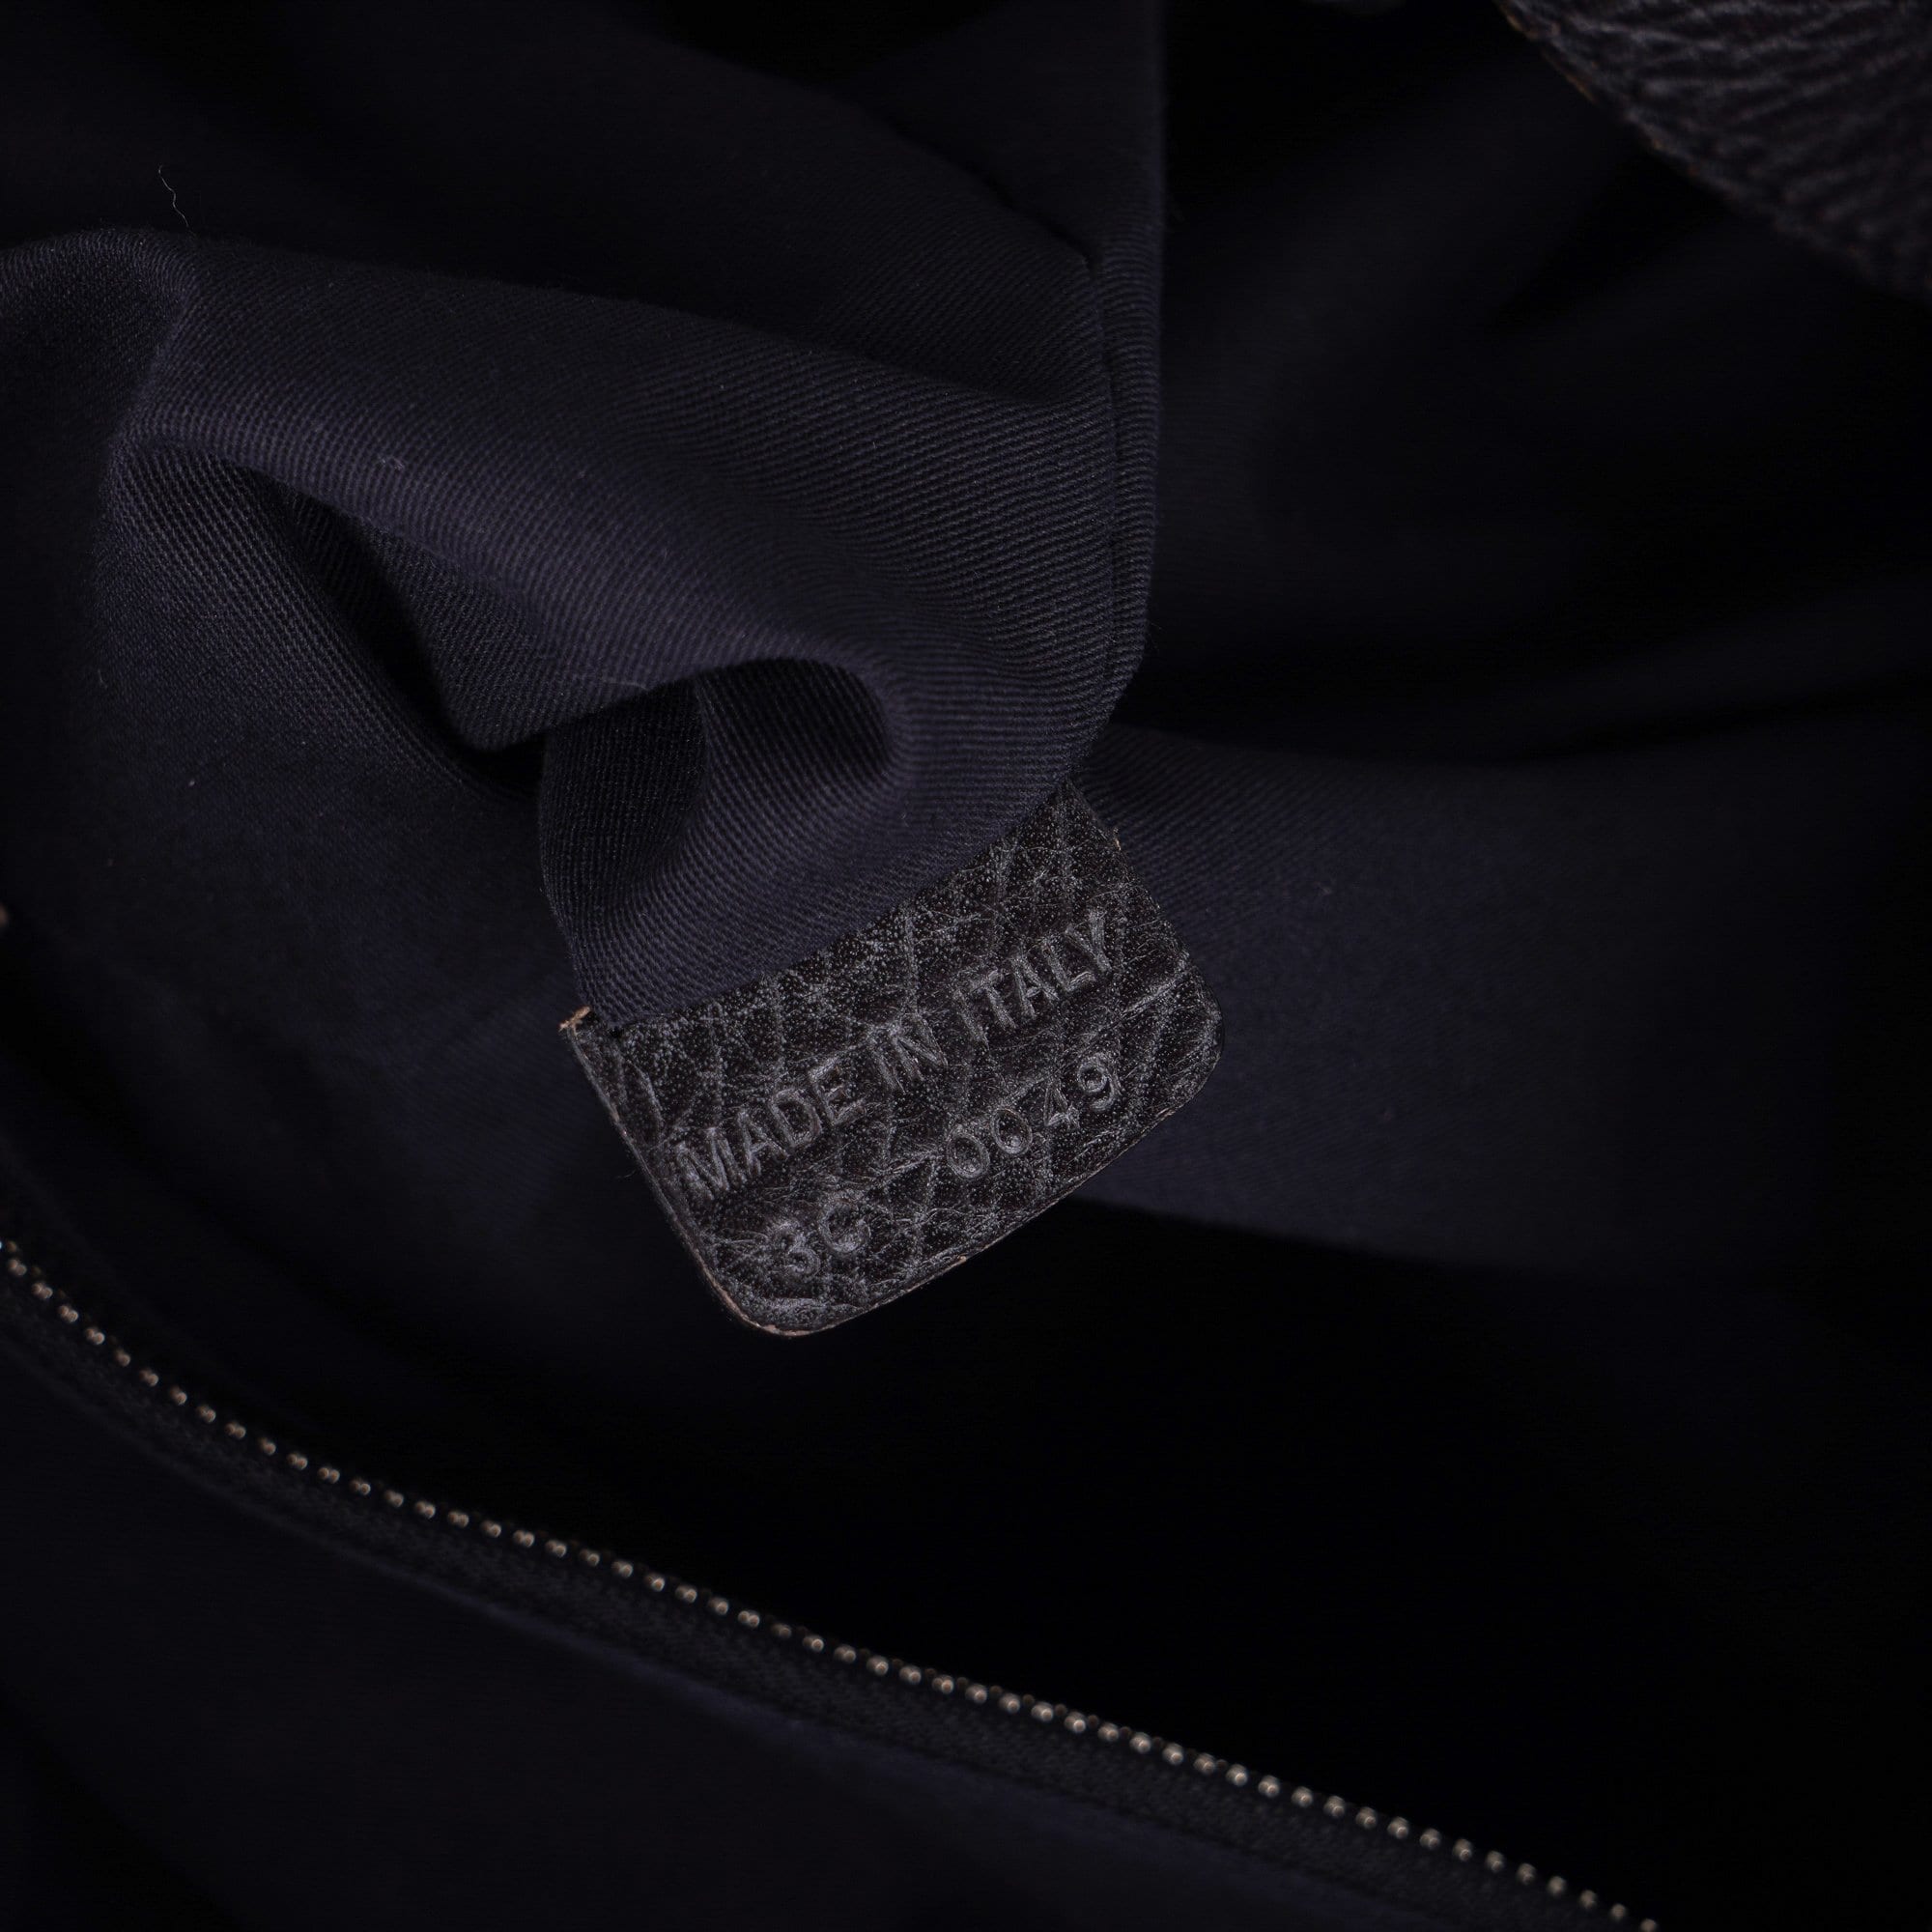 Givenchy Bag Large Textured Leather Tote Subtle Hardware Details